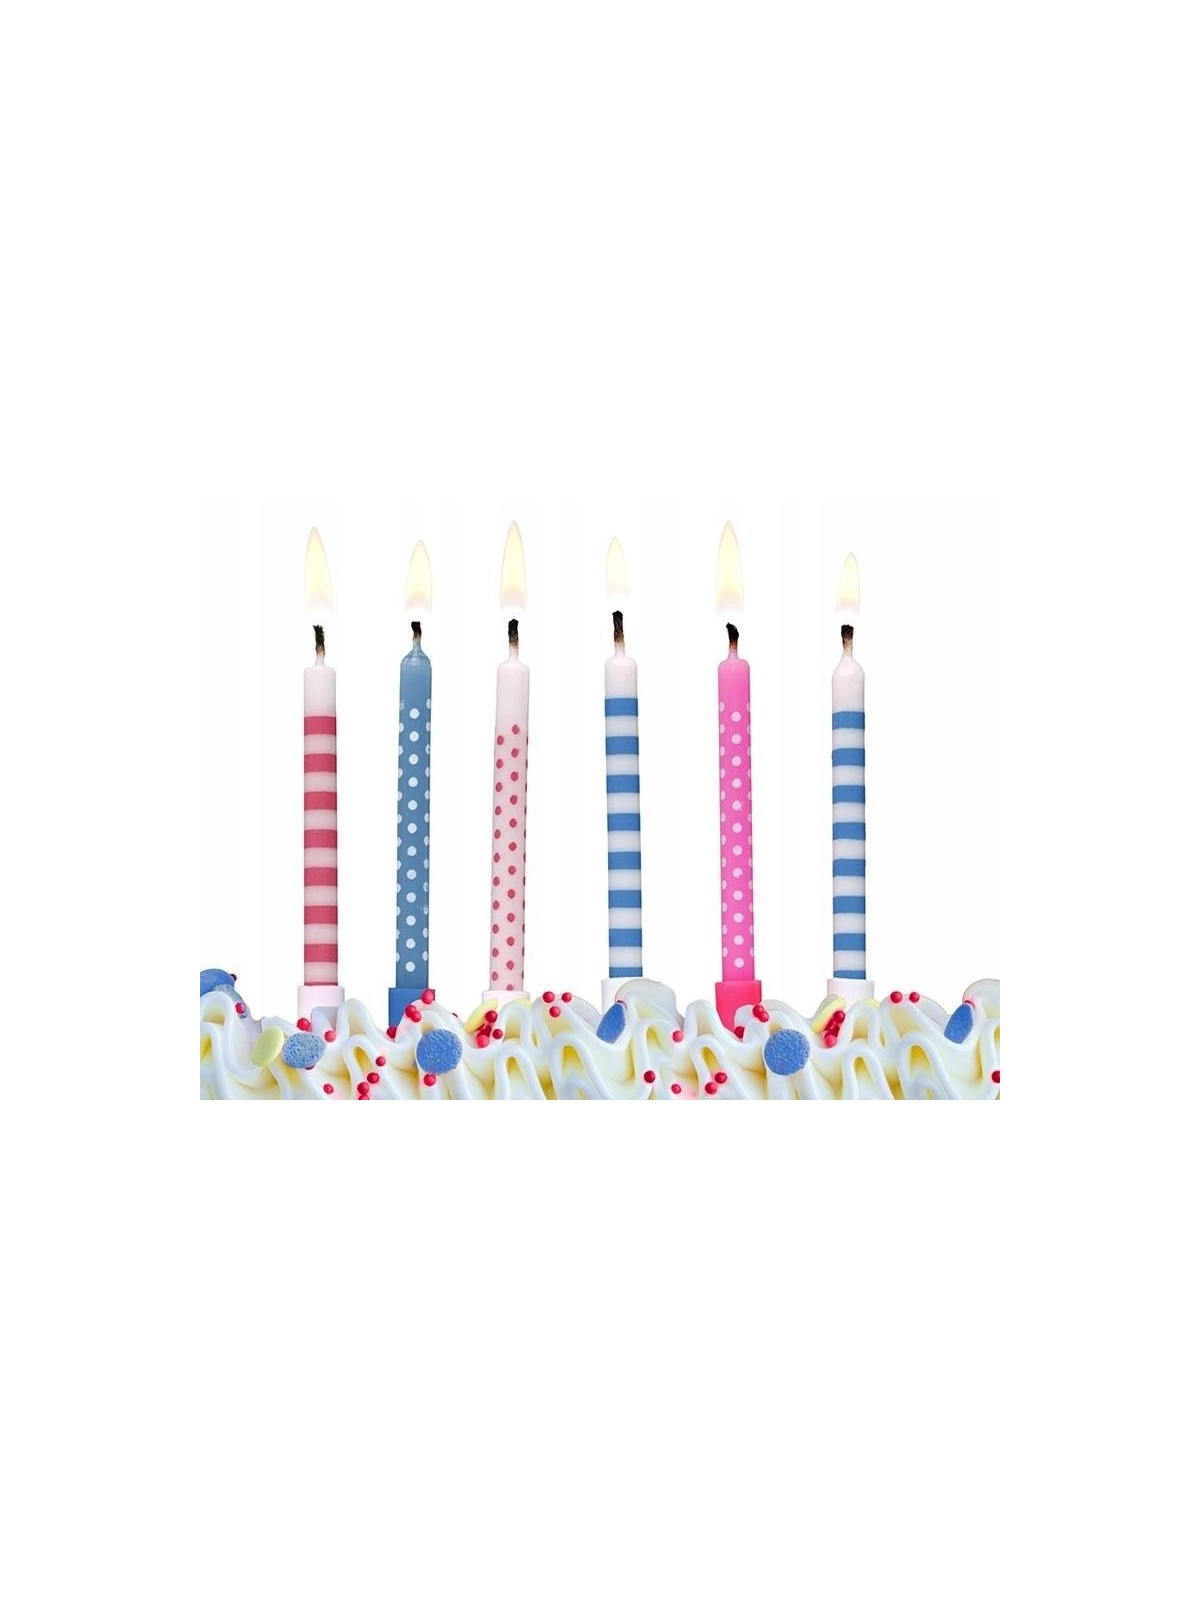 PartyDeco narodeninové sviečky - pruhy / bodky - modré / ružové 6ks